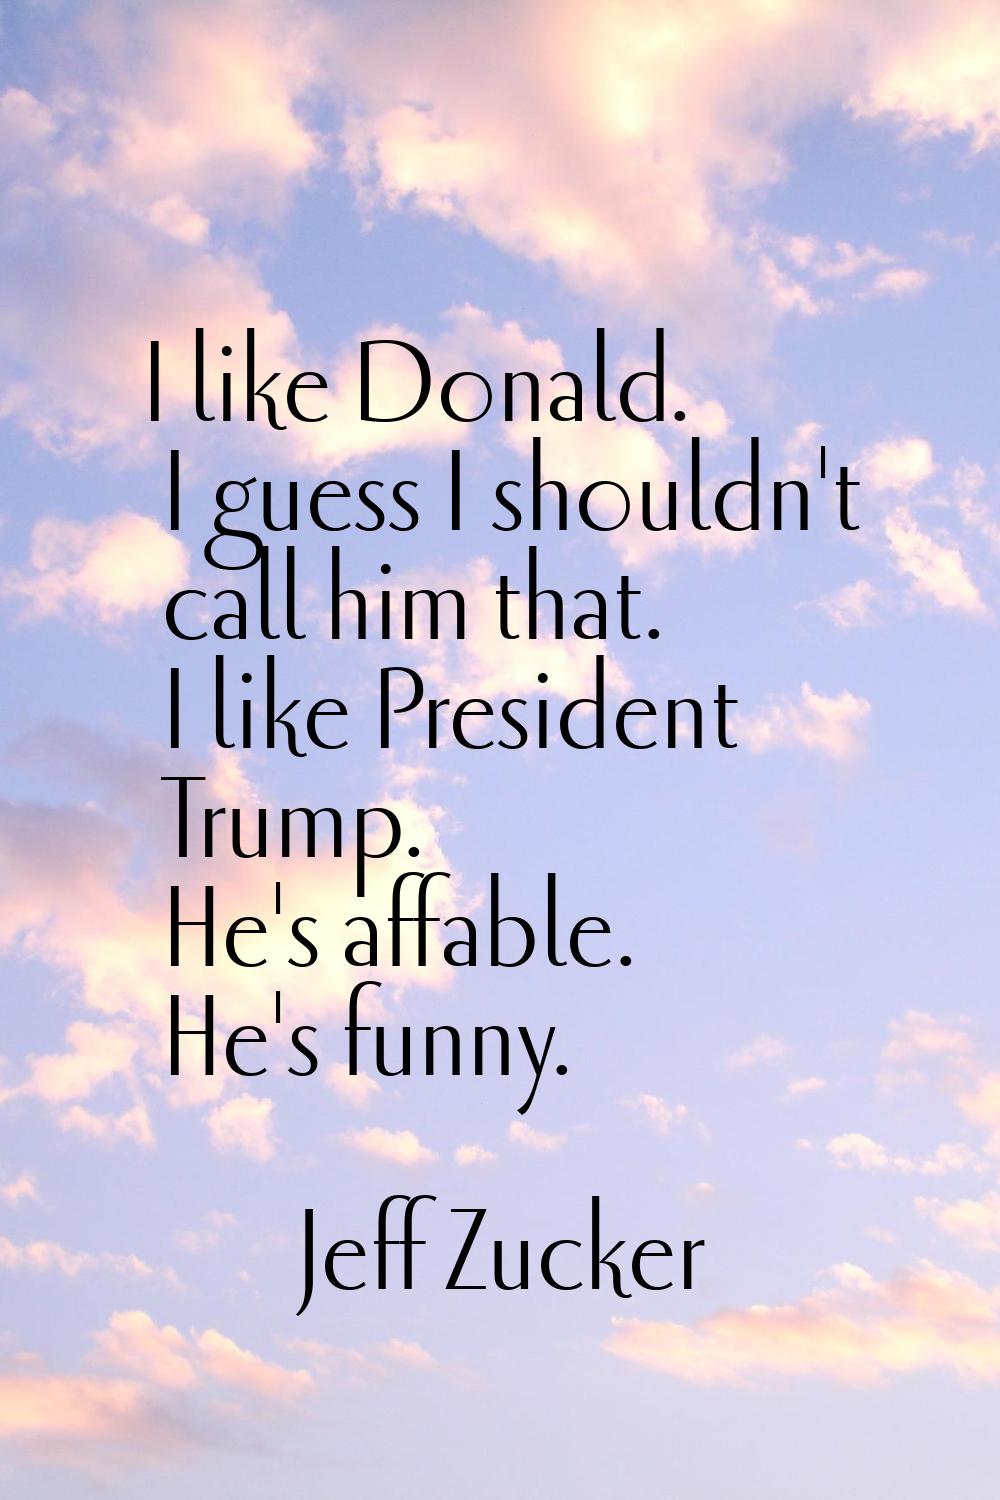 I like Donald. I guess I shouldn't call him that. I like President Trump. He's affable. He's funny.